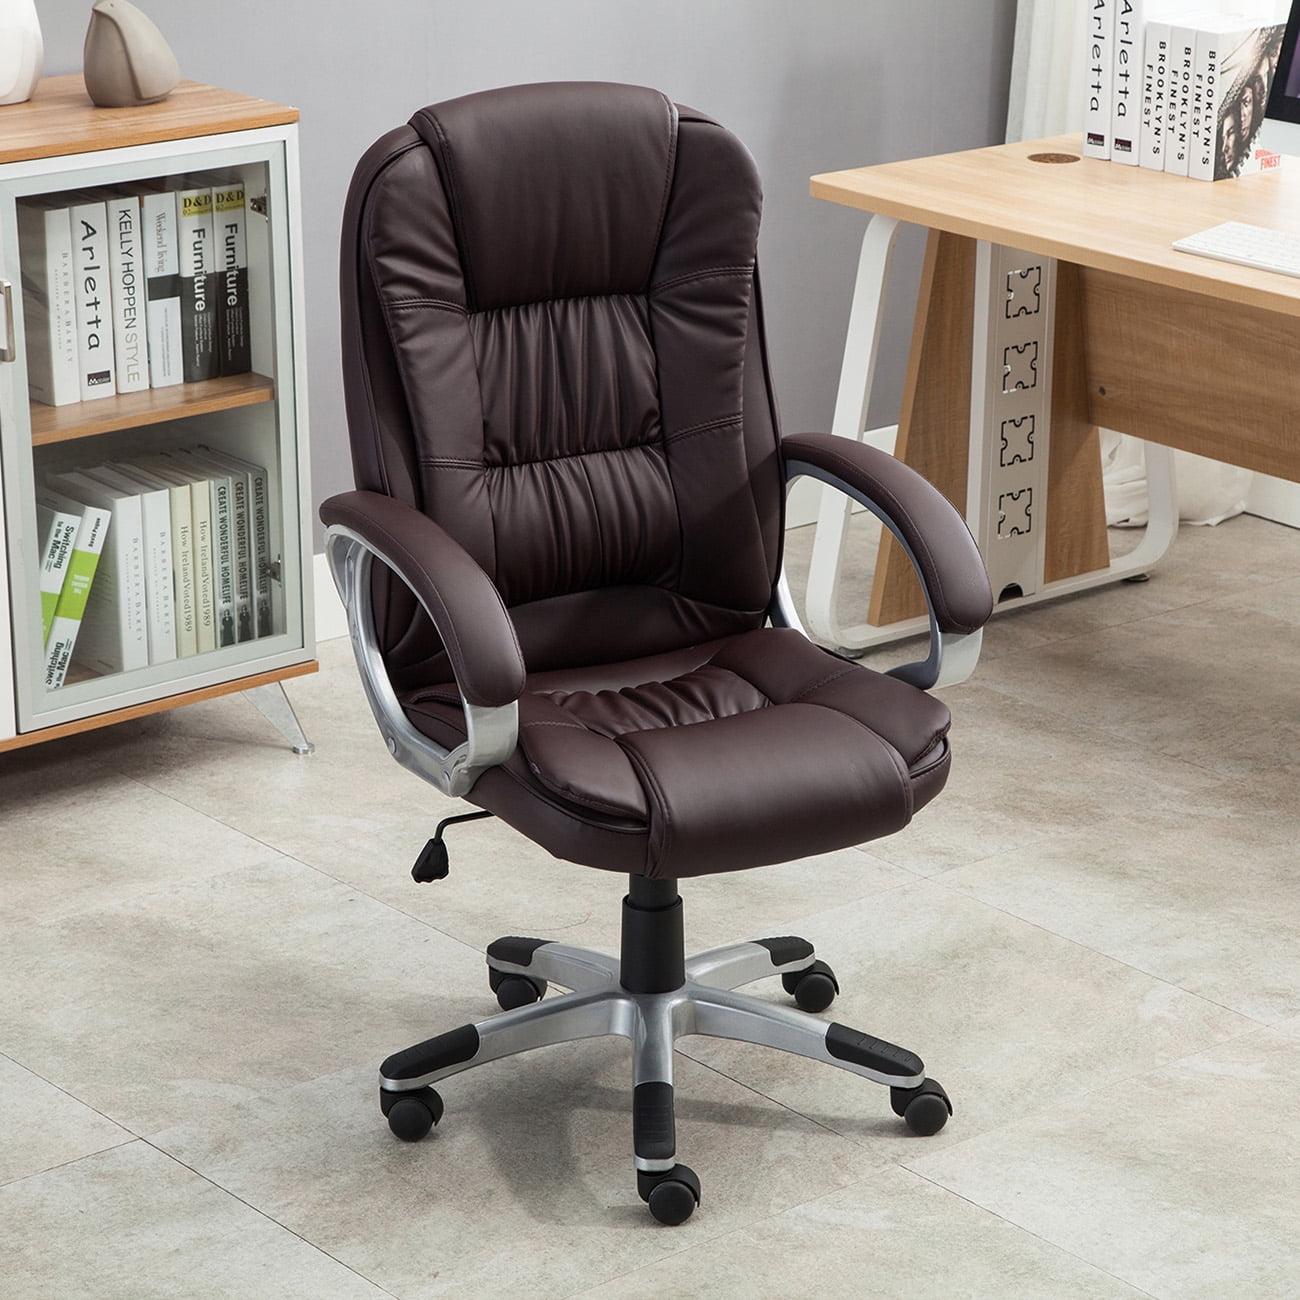 Belleze High Back Executive Faux Leather Ergonomic Desk Office Chair